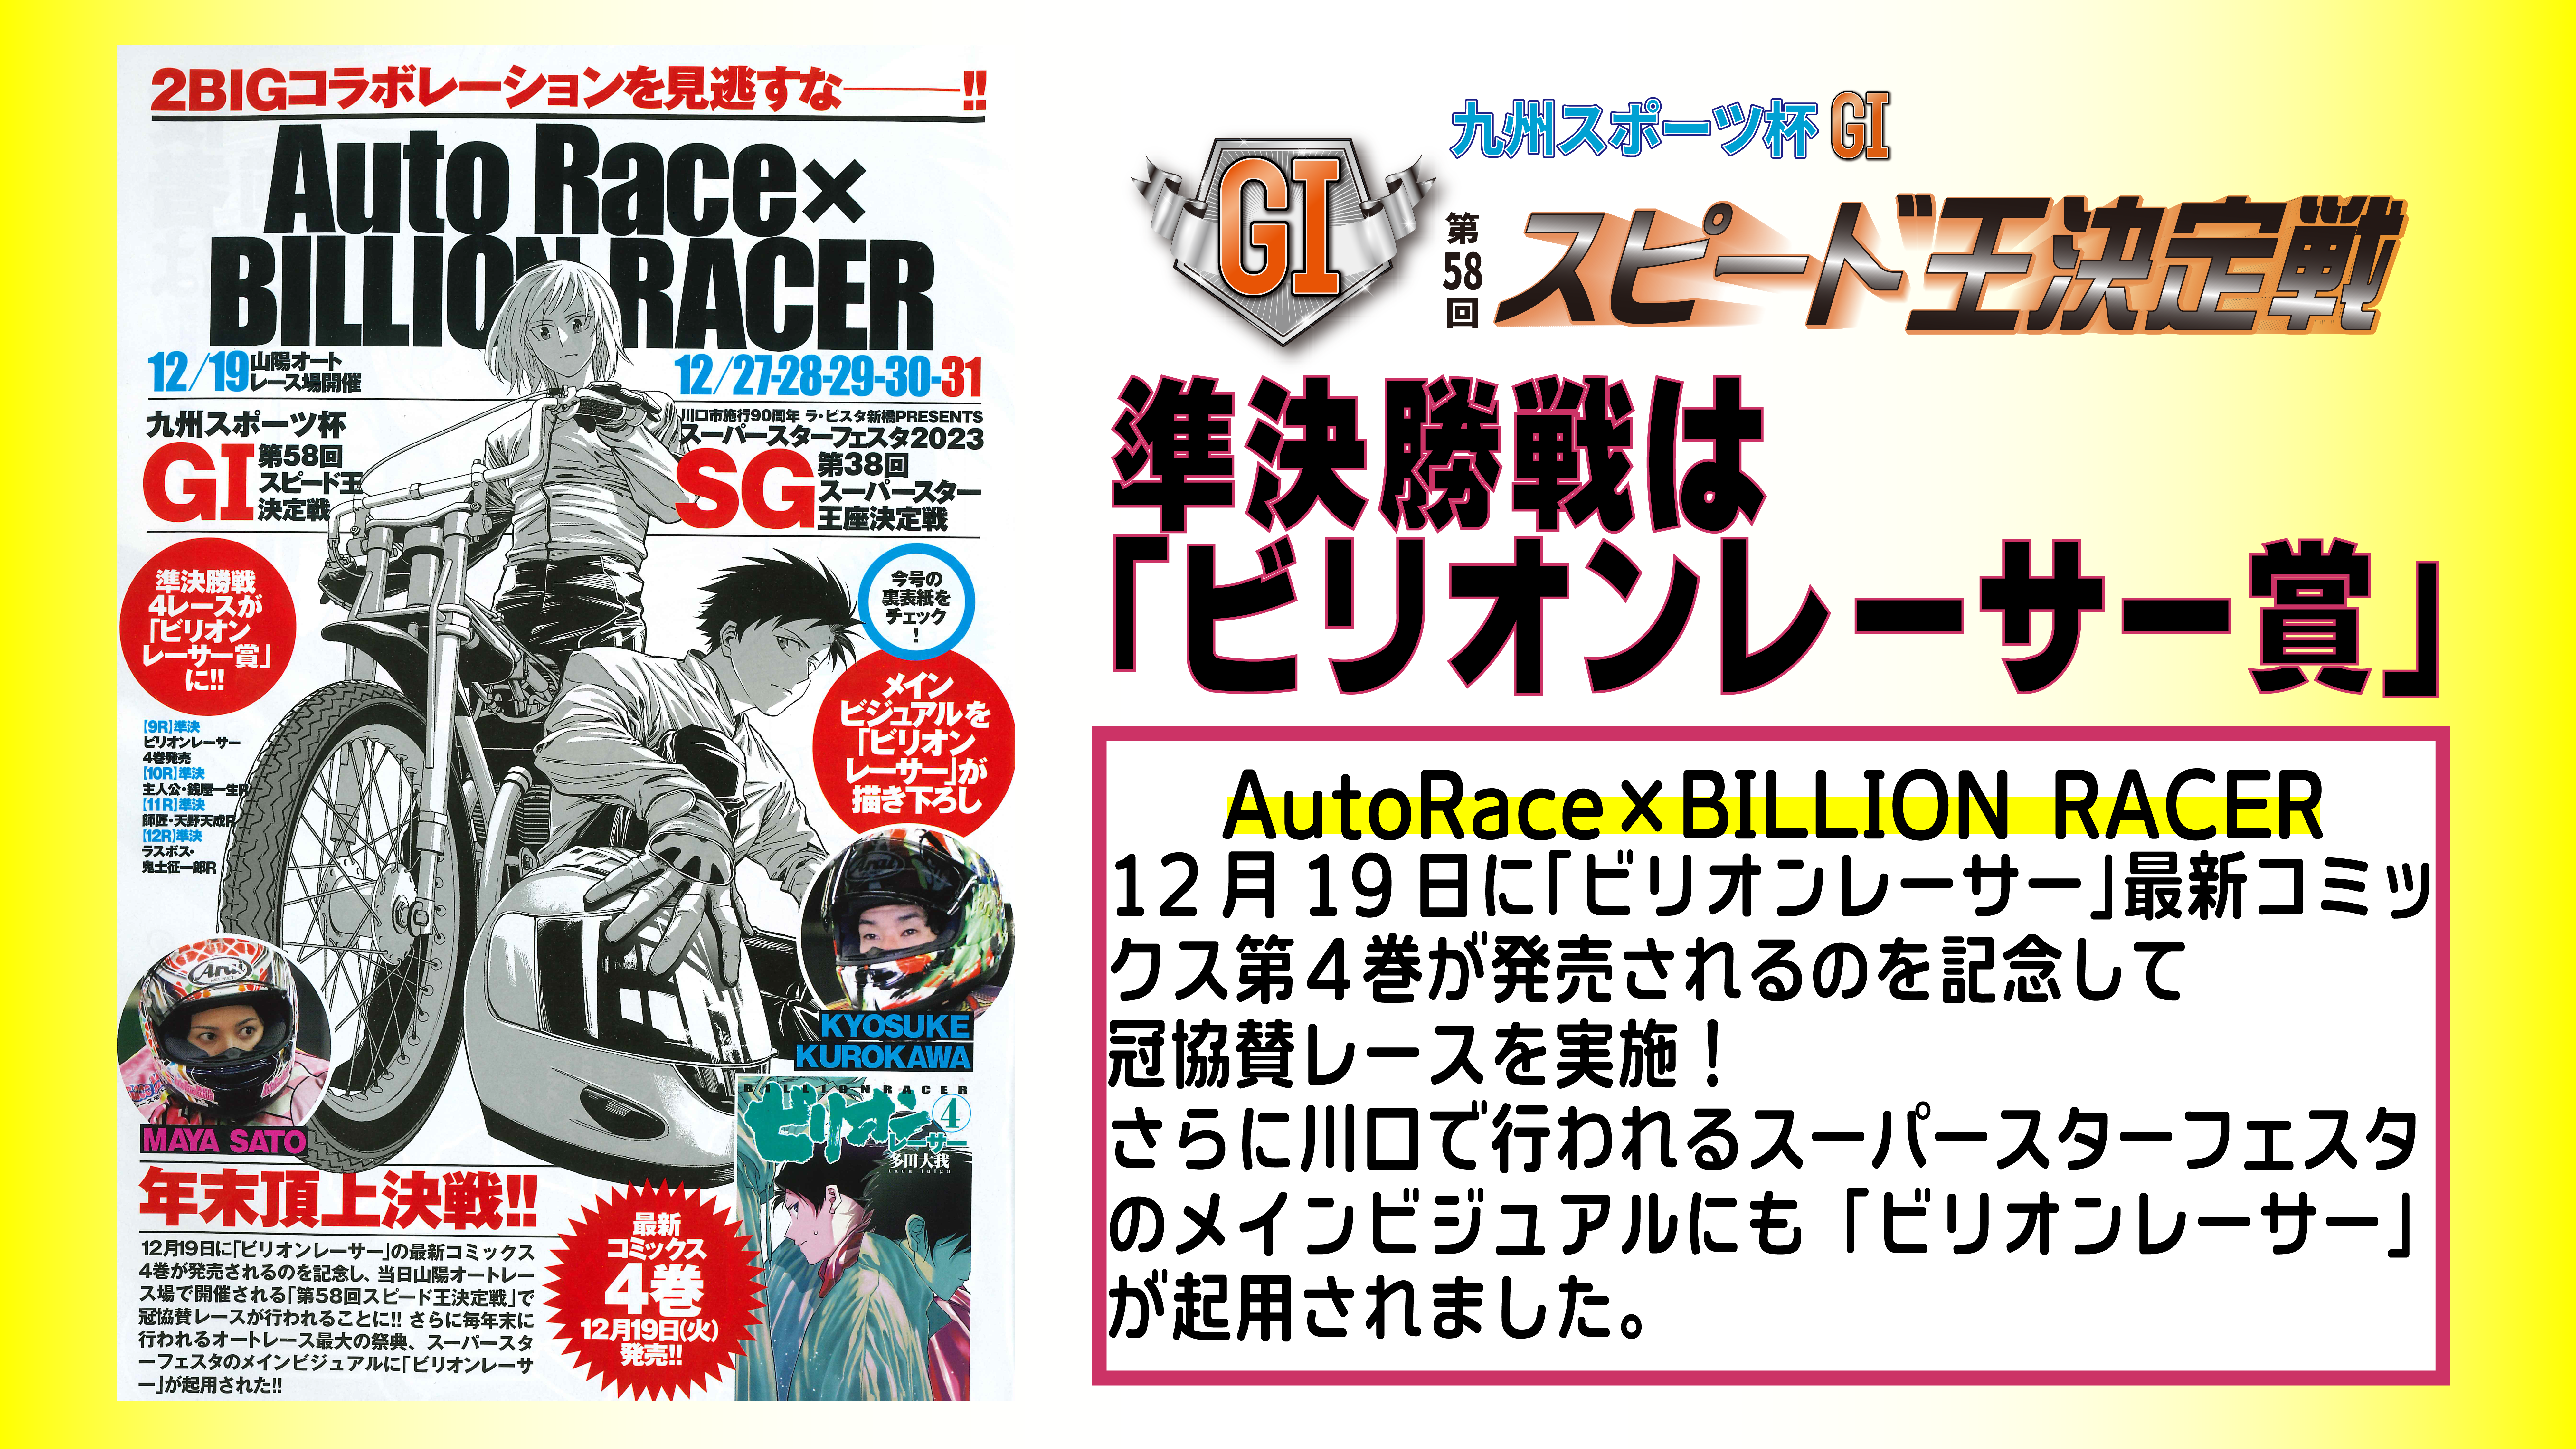 【AutoRace×BILLION RACER】 ビリオンレーサー冠協賛レースを実施します